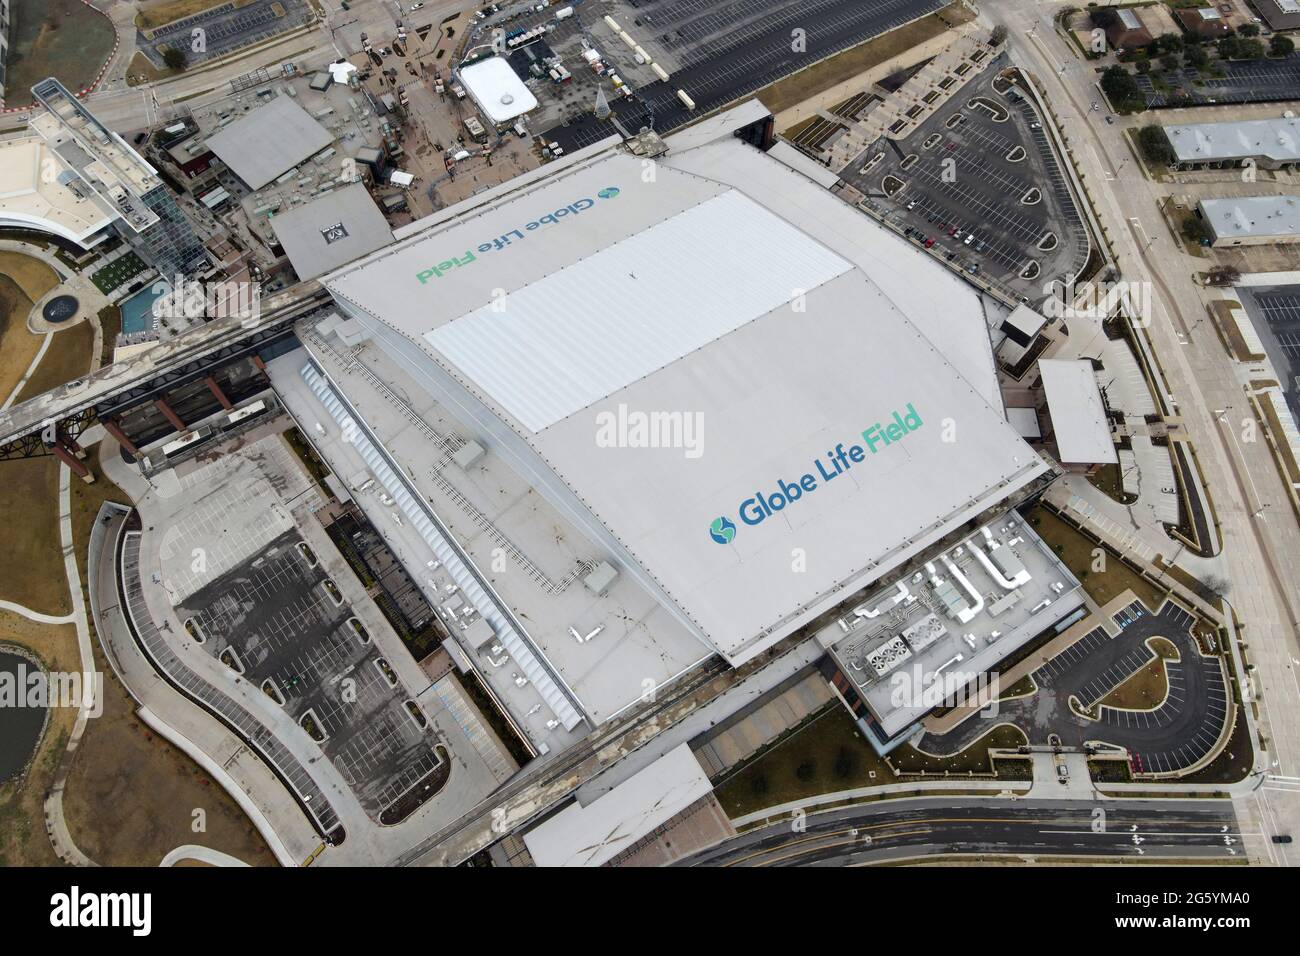 Una vista aerea di Globe Life Field, venerdì 1 gennaio 2021, ad Arlington, Lo stadio è la sede dei Texas Rangers. Foto Stock